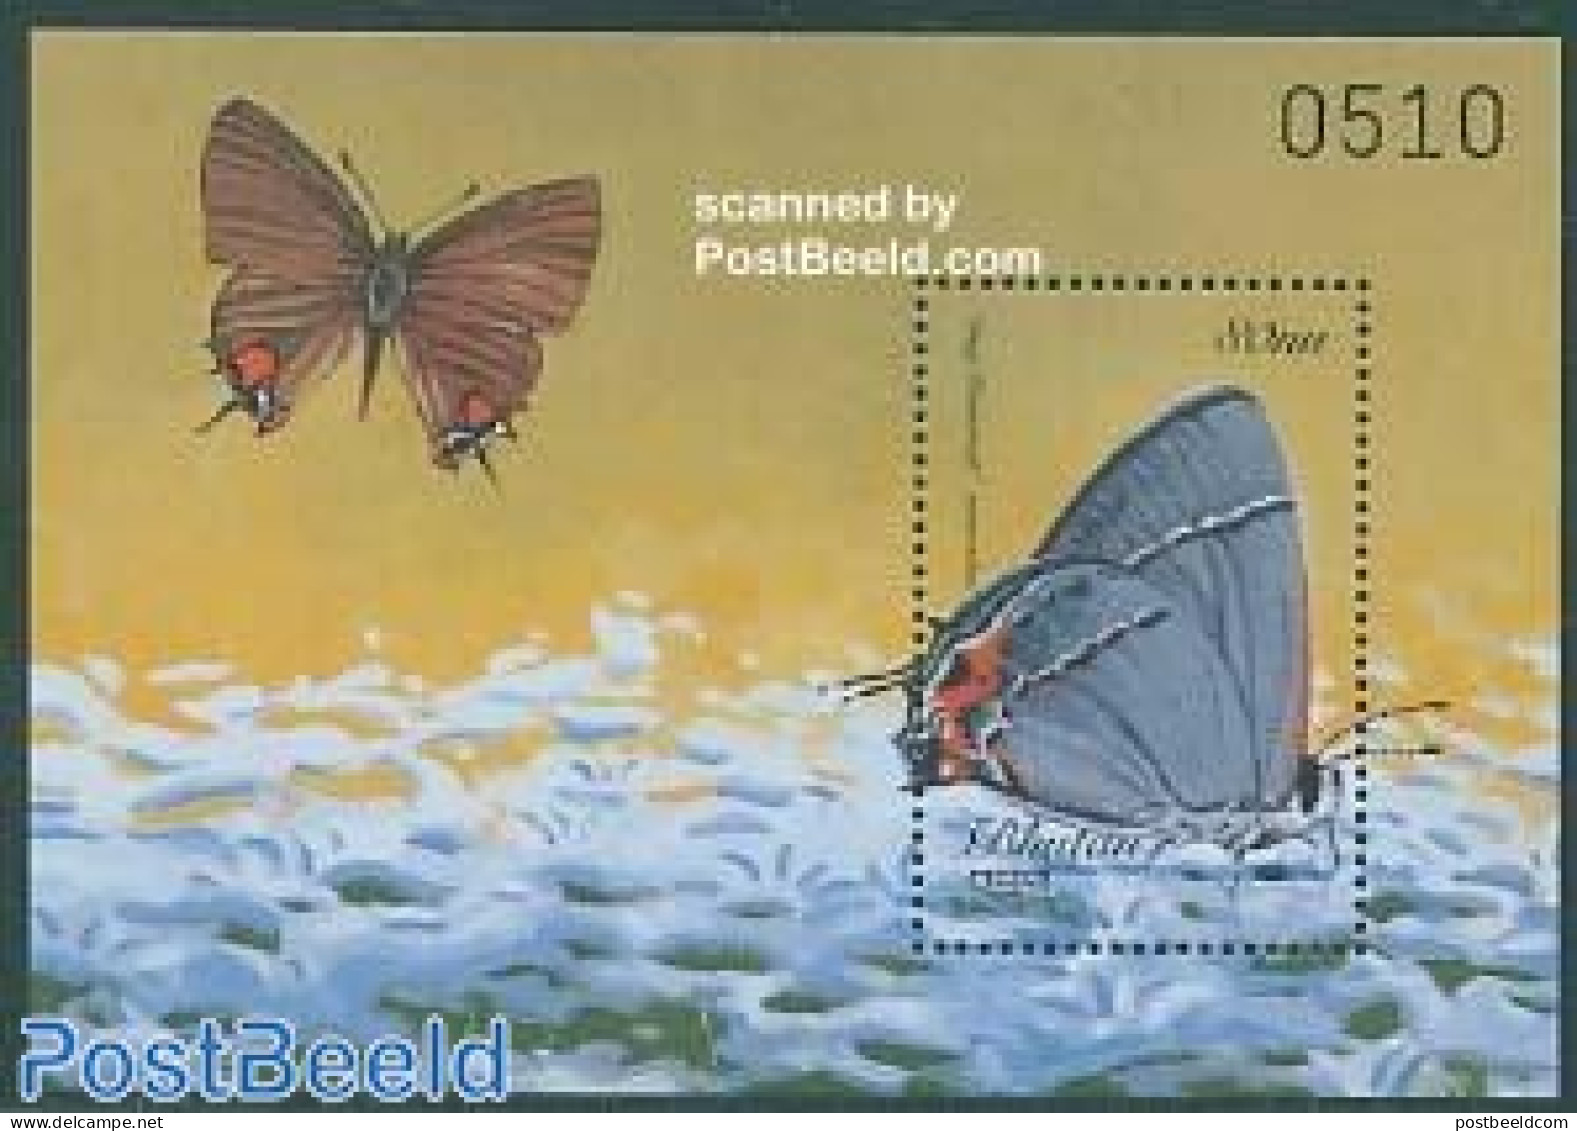 Bhutan 1999 Butterfly S/s, Strymon Melinus, Mint NH, Nature - Butterflies - Bhután